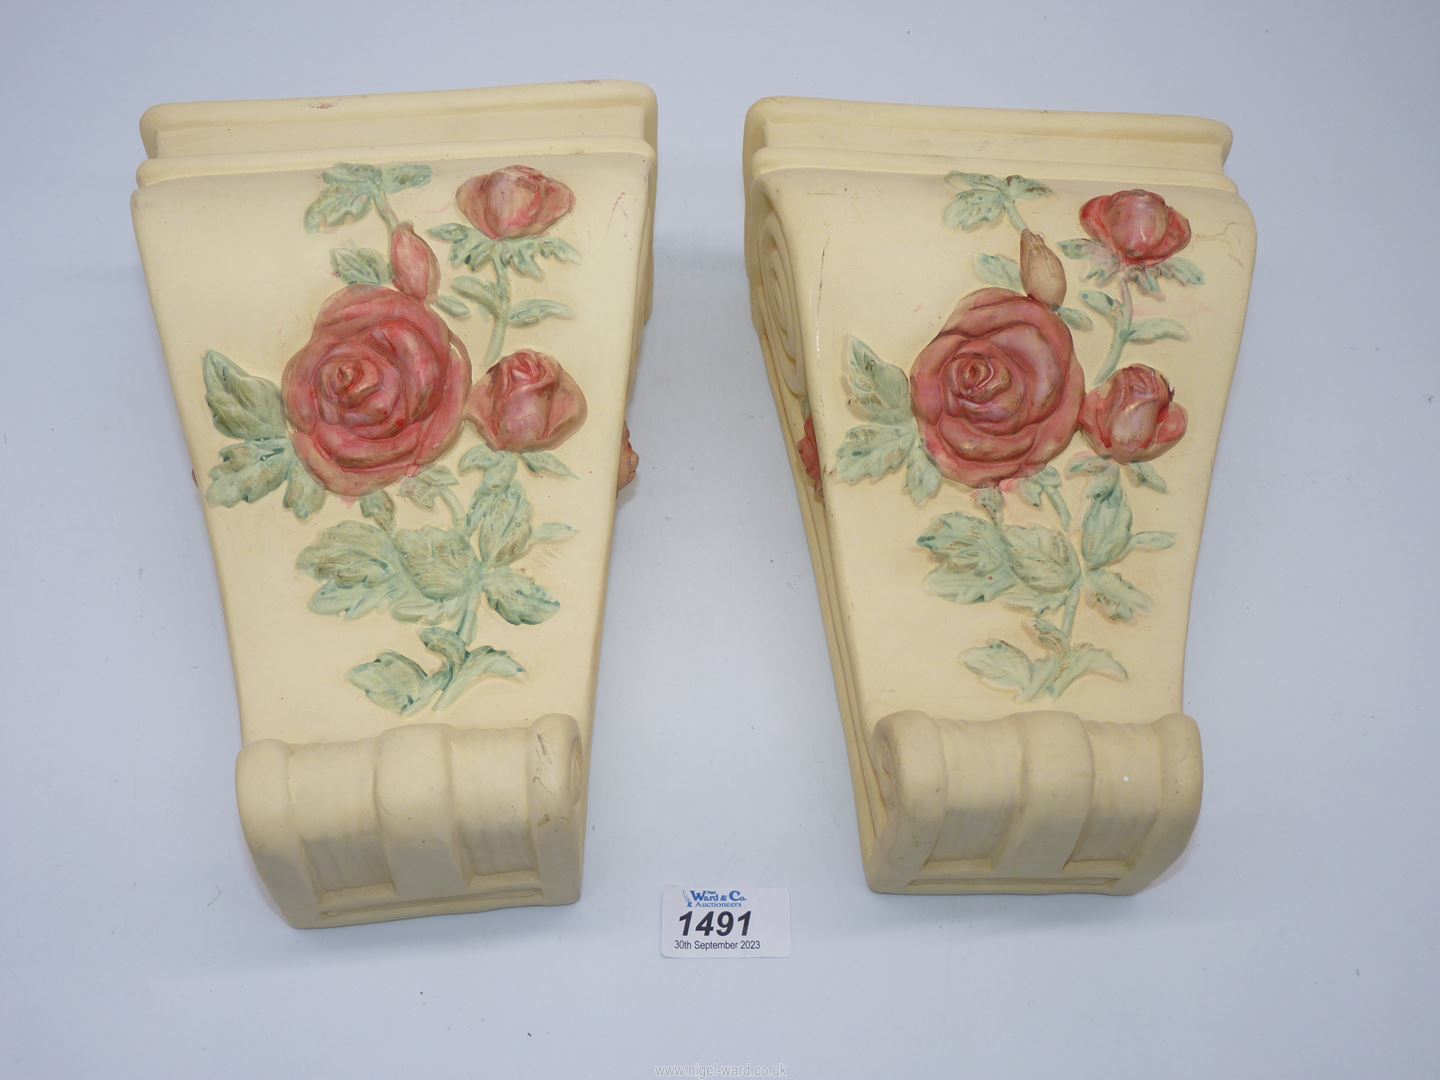 A pair of decorative ceramic corbels.